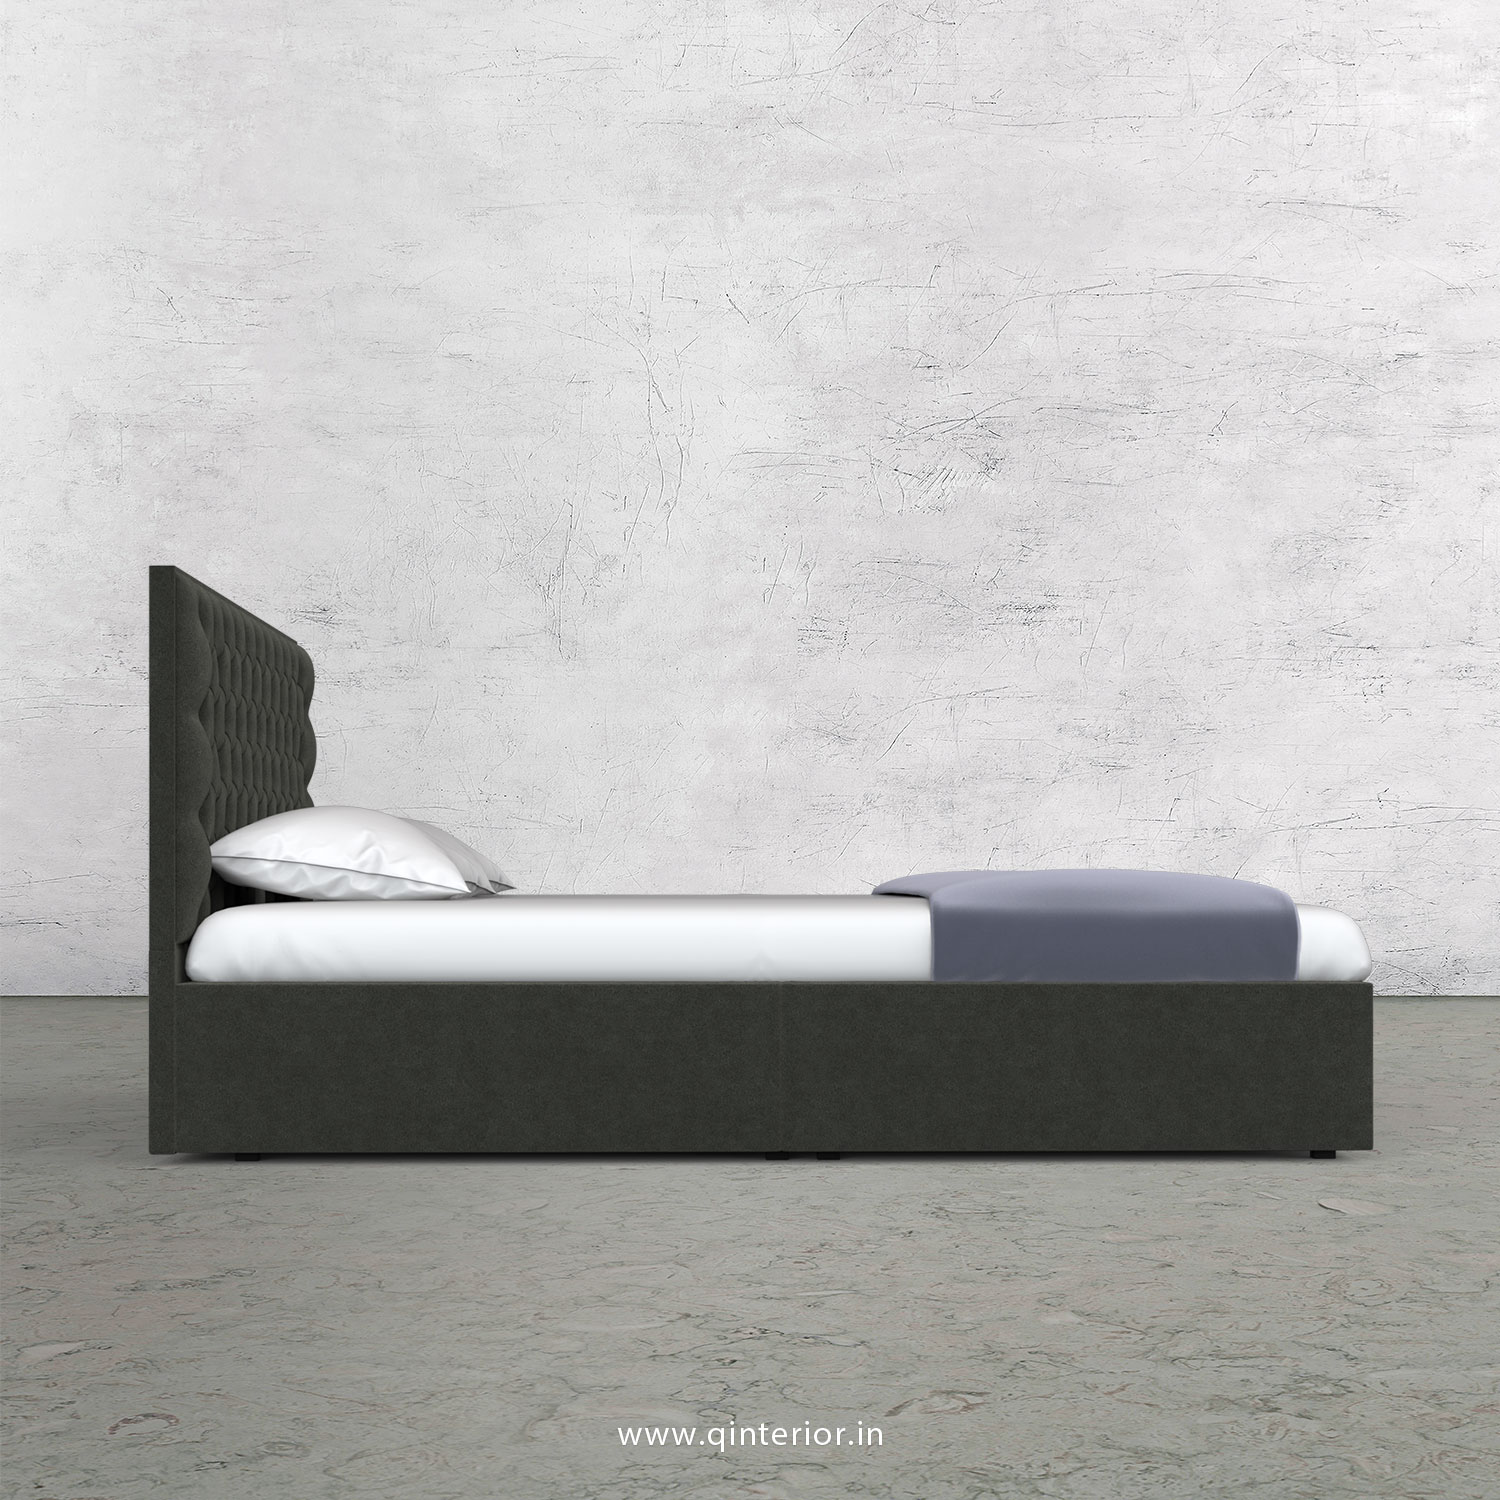 Orion King Size Storage Bed in Velvet Fabric - KBD001 VL15